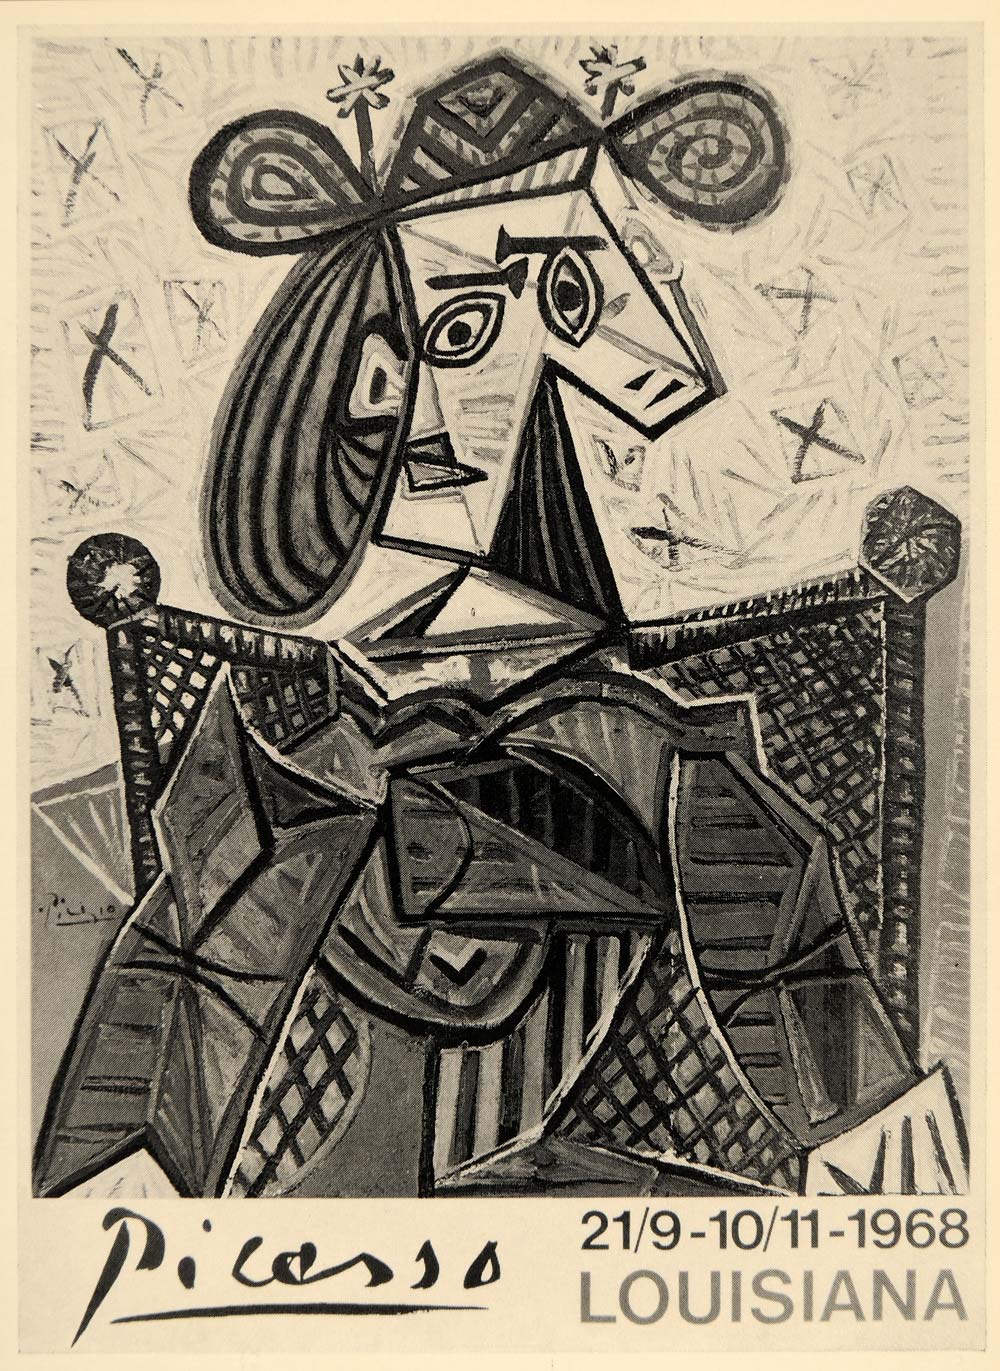 1971 Print Pablo Picasso Louisiana Denmark Poster 1968 - ORIGINAL PIC3